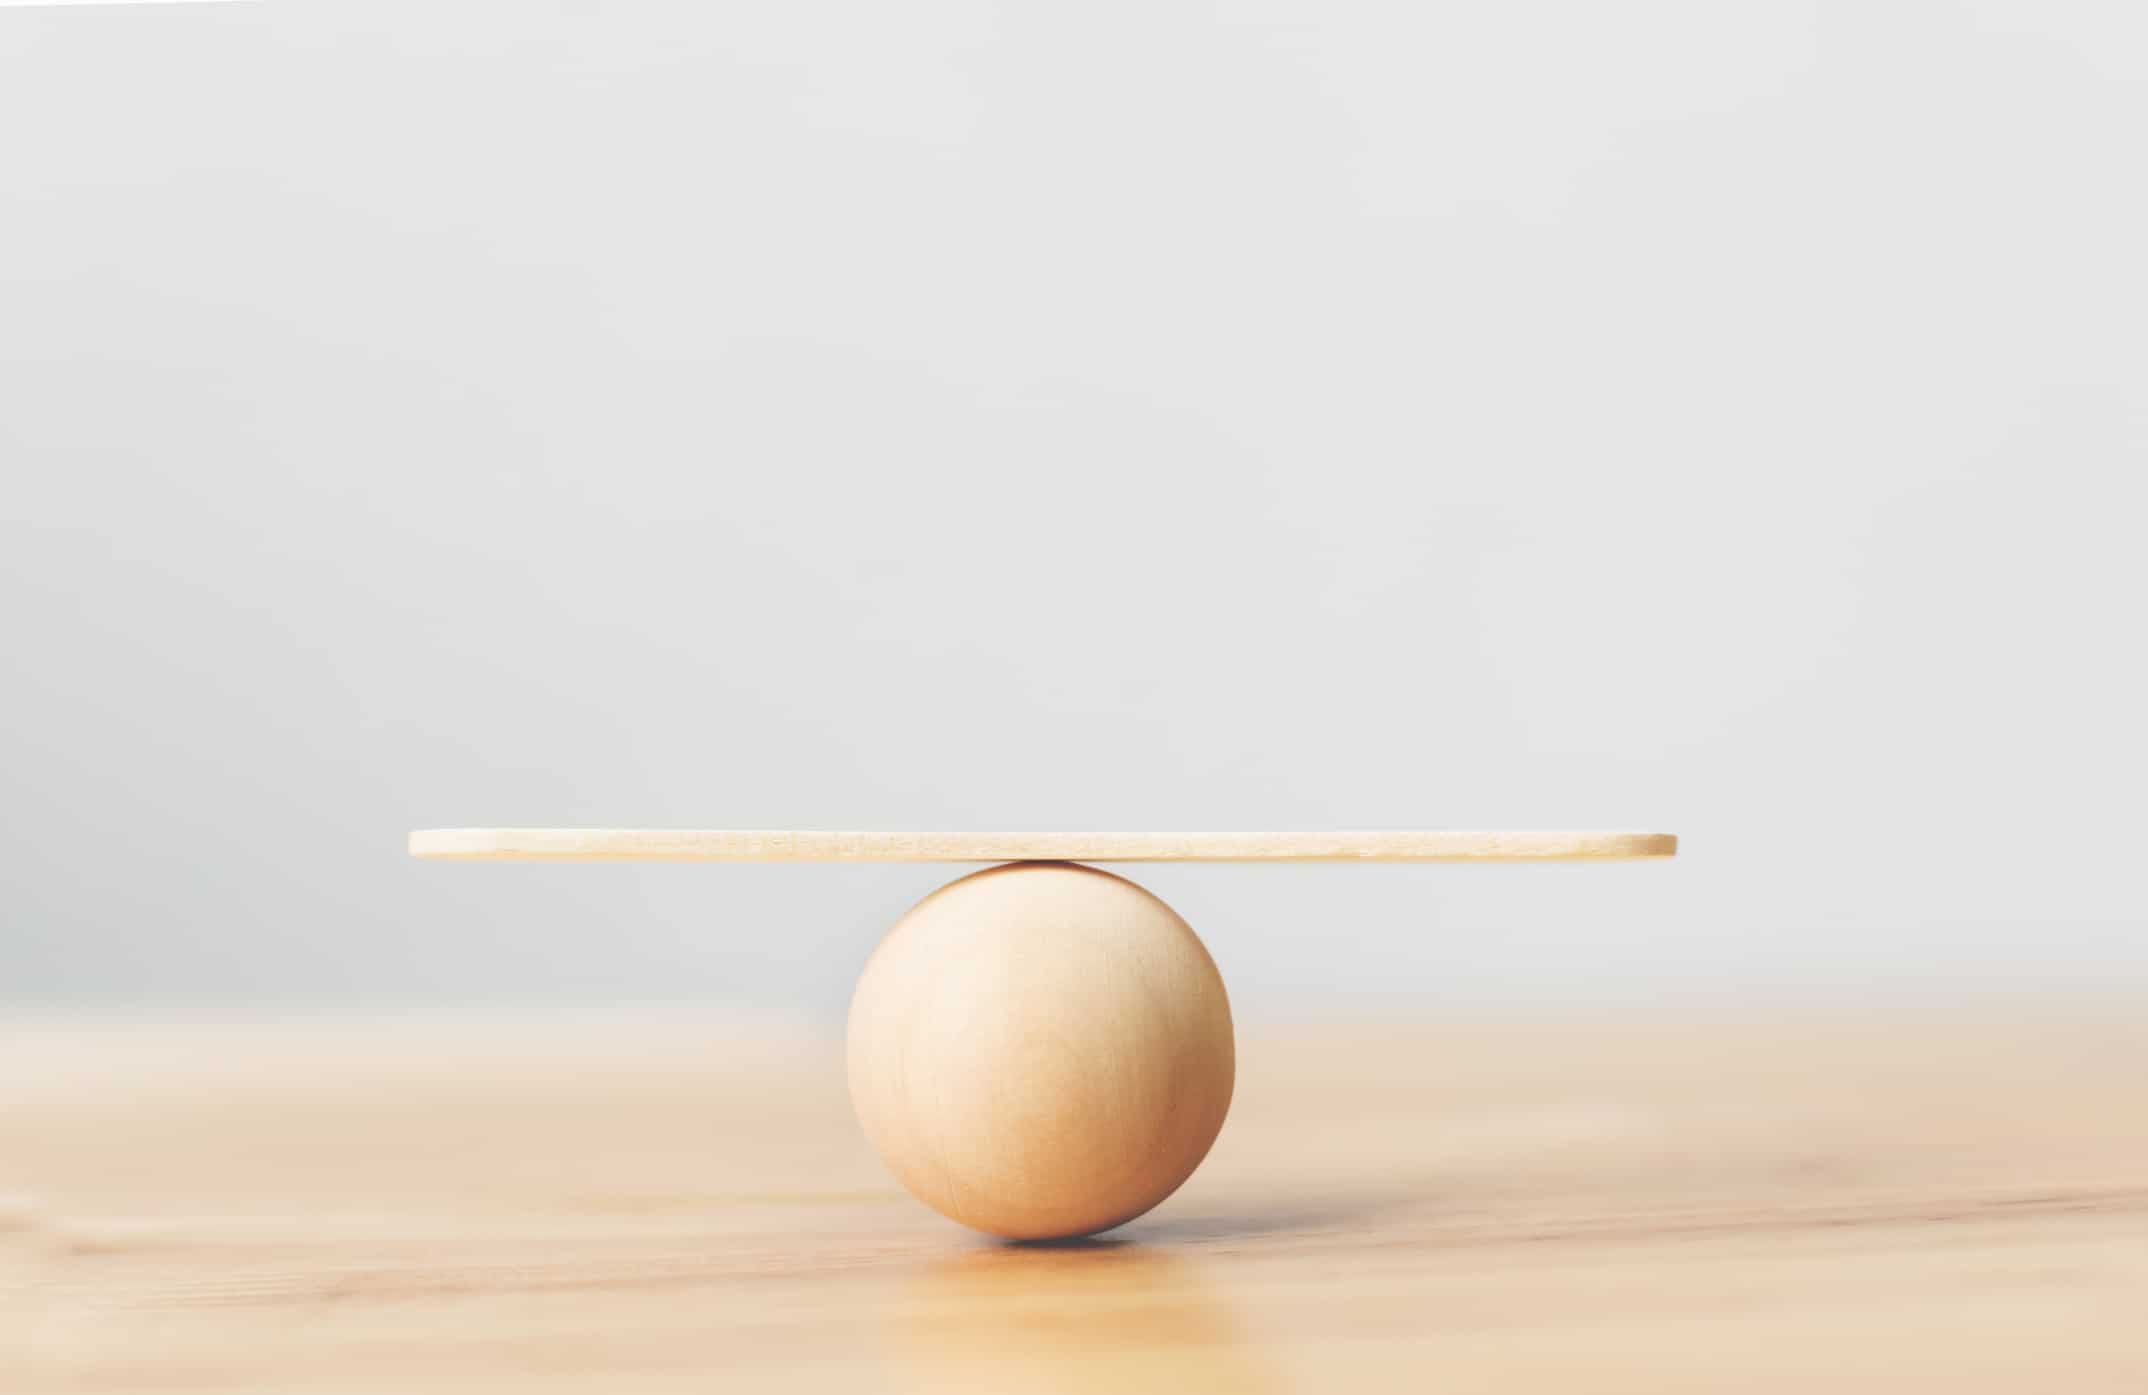 Wooden ball balancing a wooden stick on top